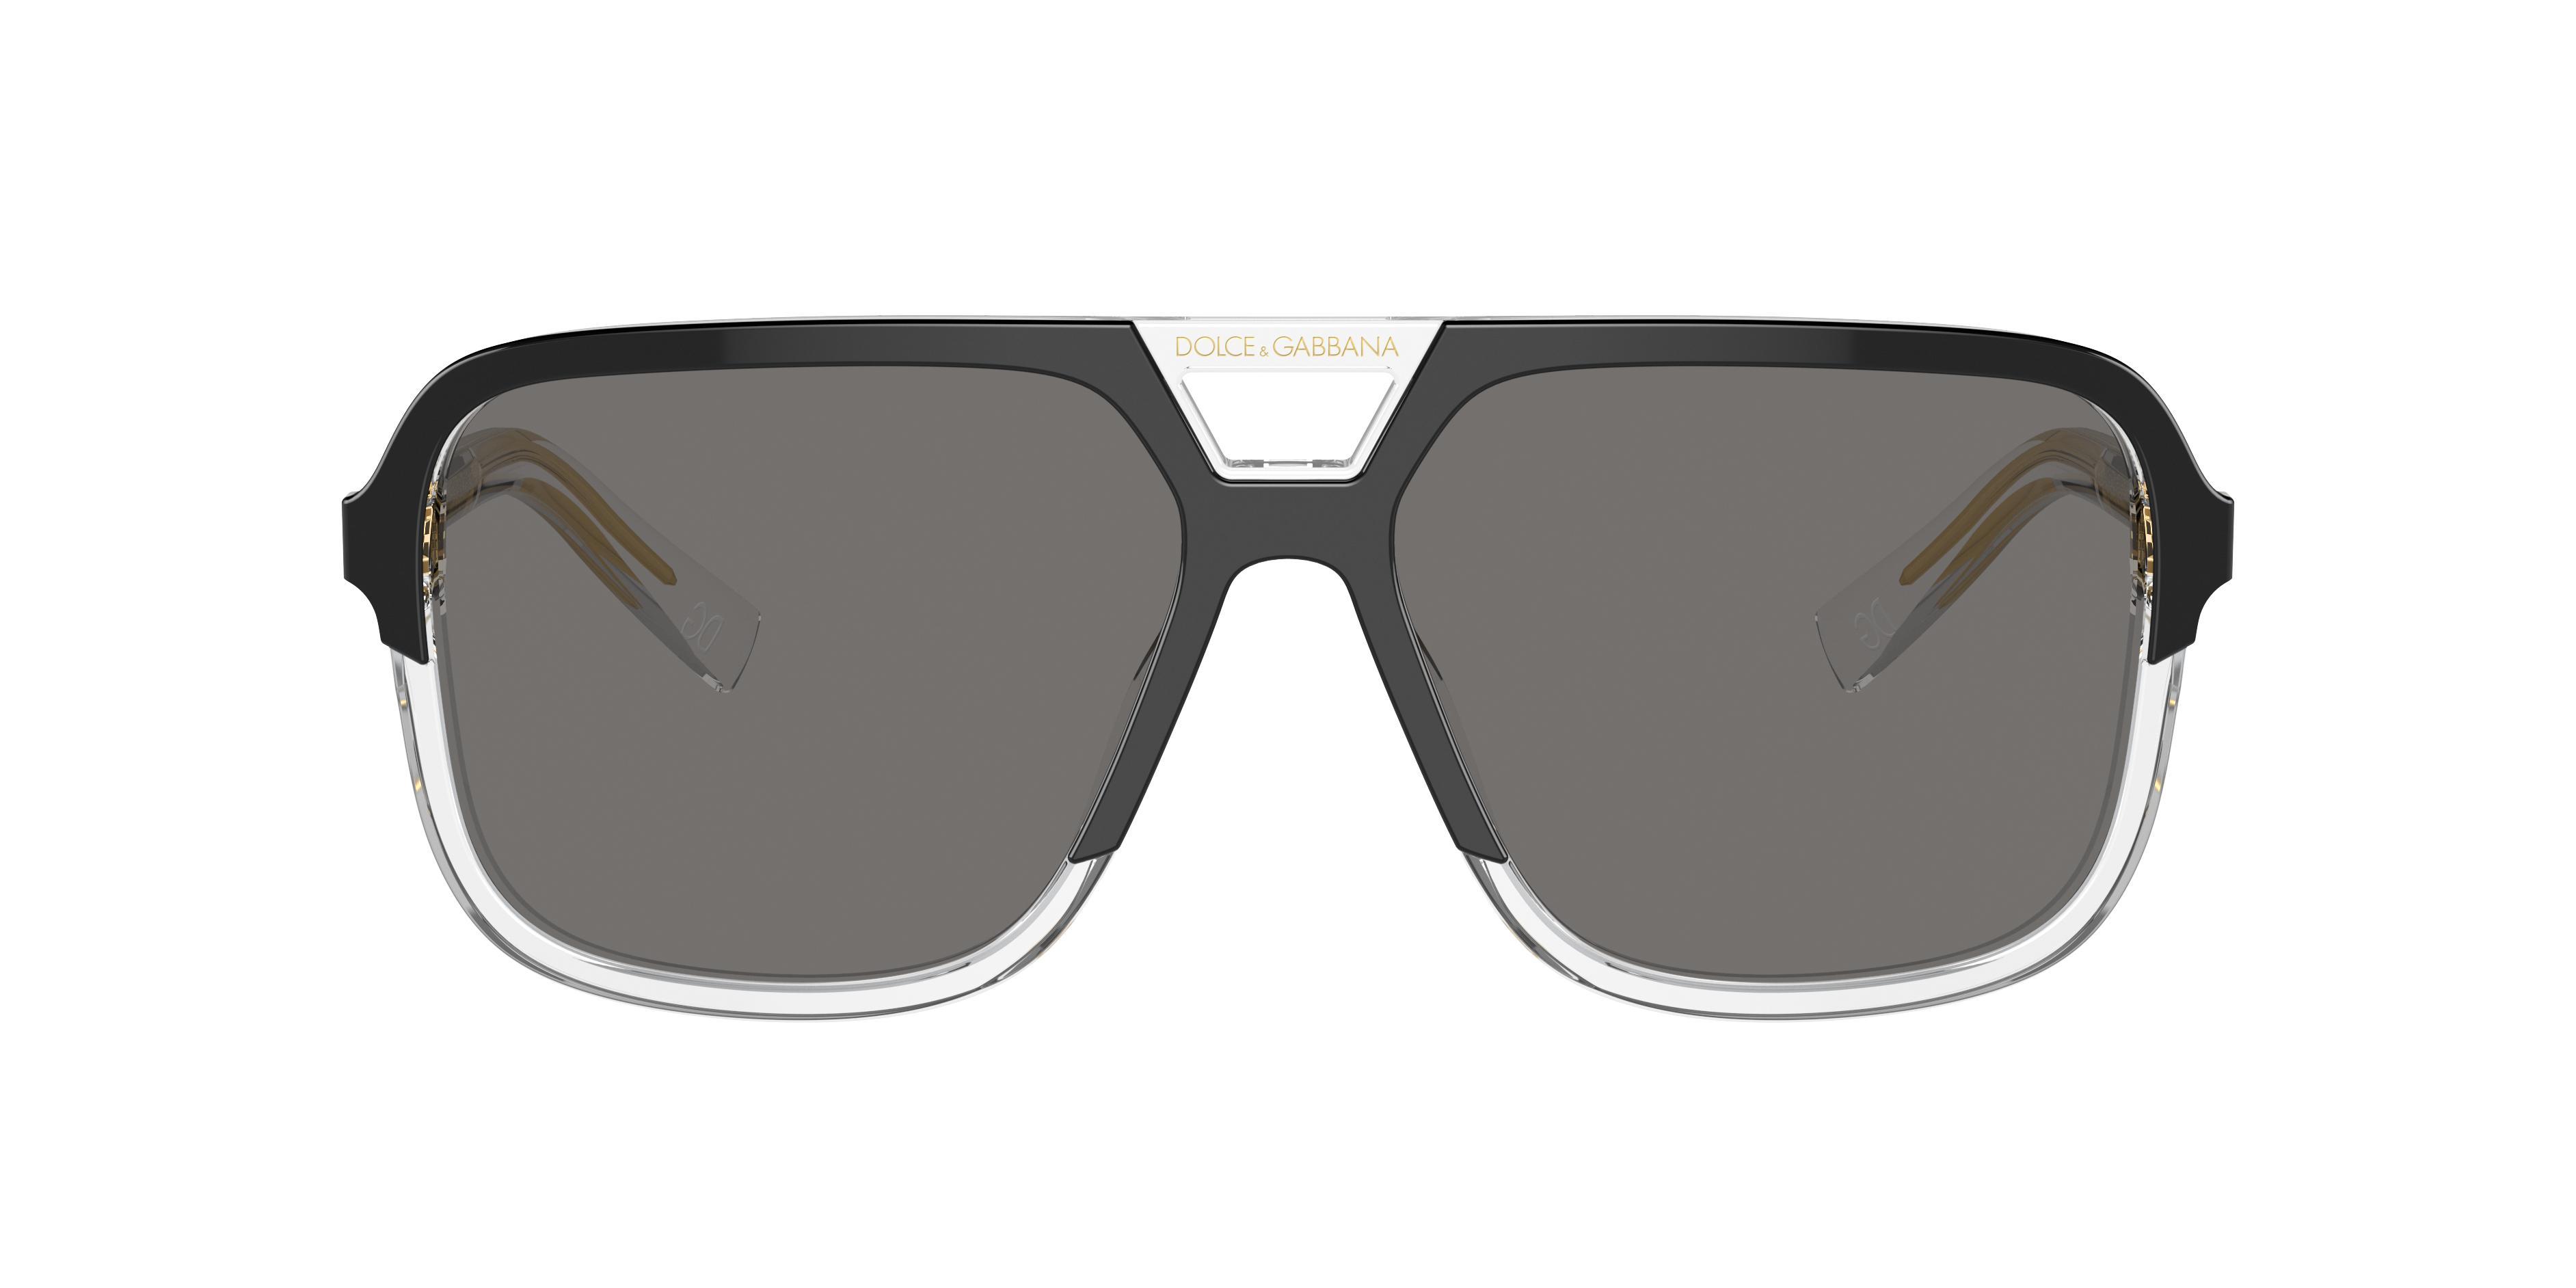 Dolce & Gabbana 58mm Polarized Square Sunglasses Product Image